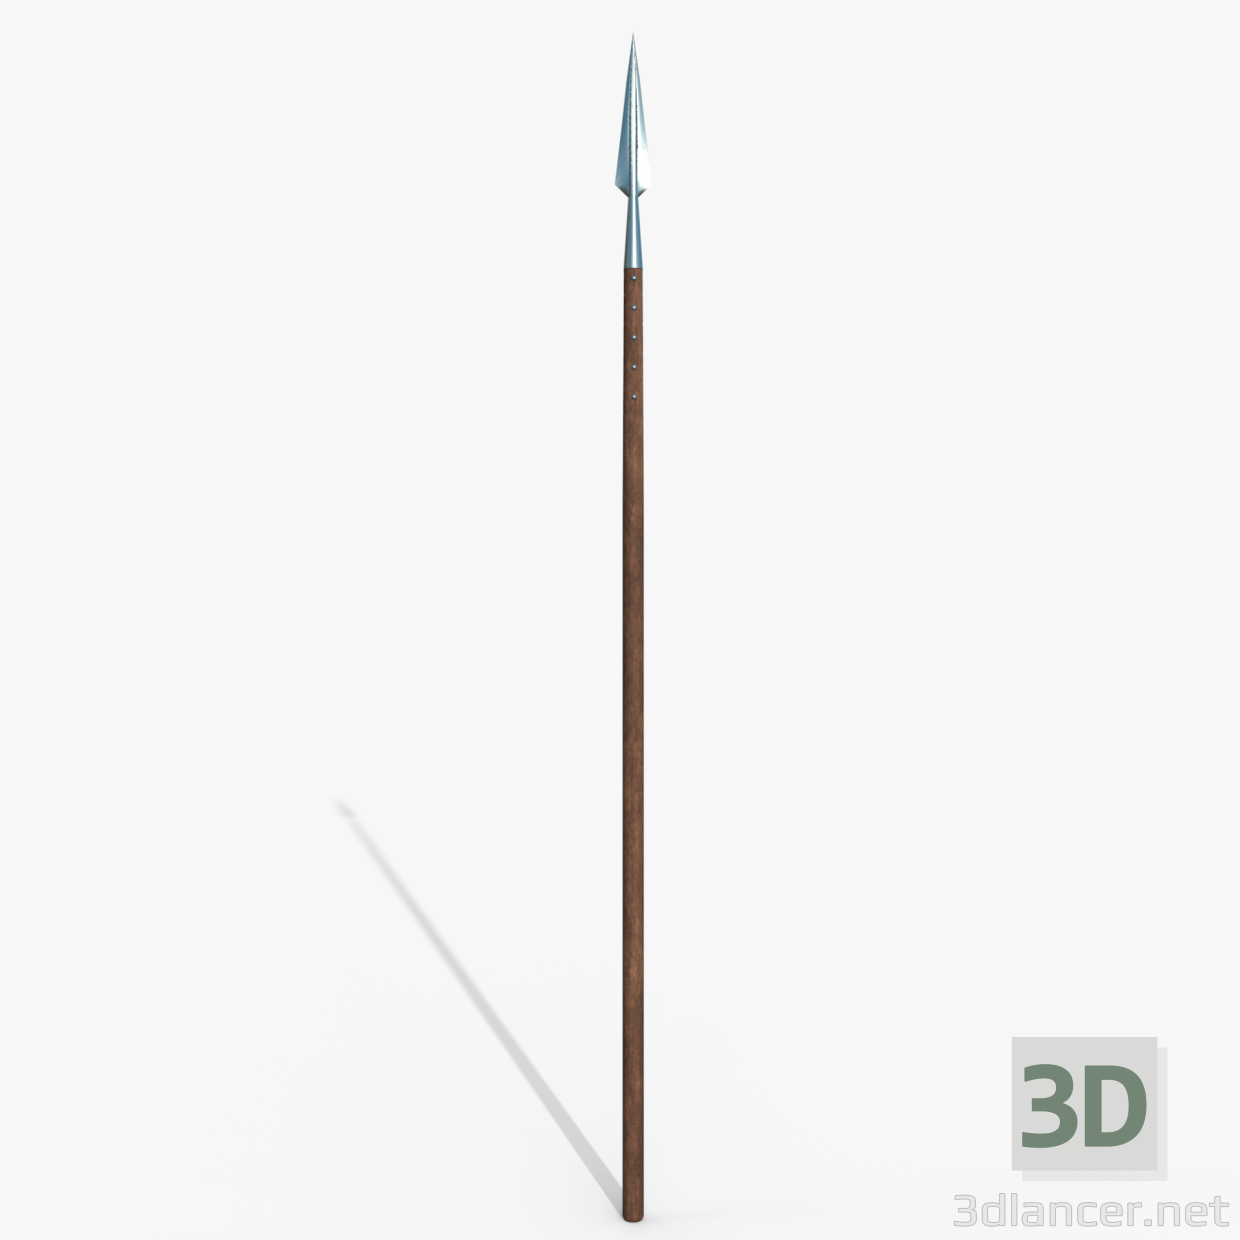 3D Yunan Mızrağı modeli satın - render